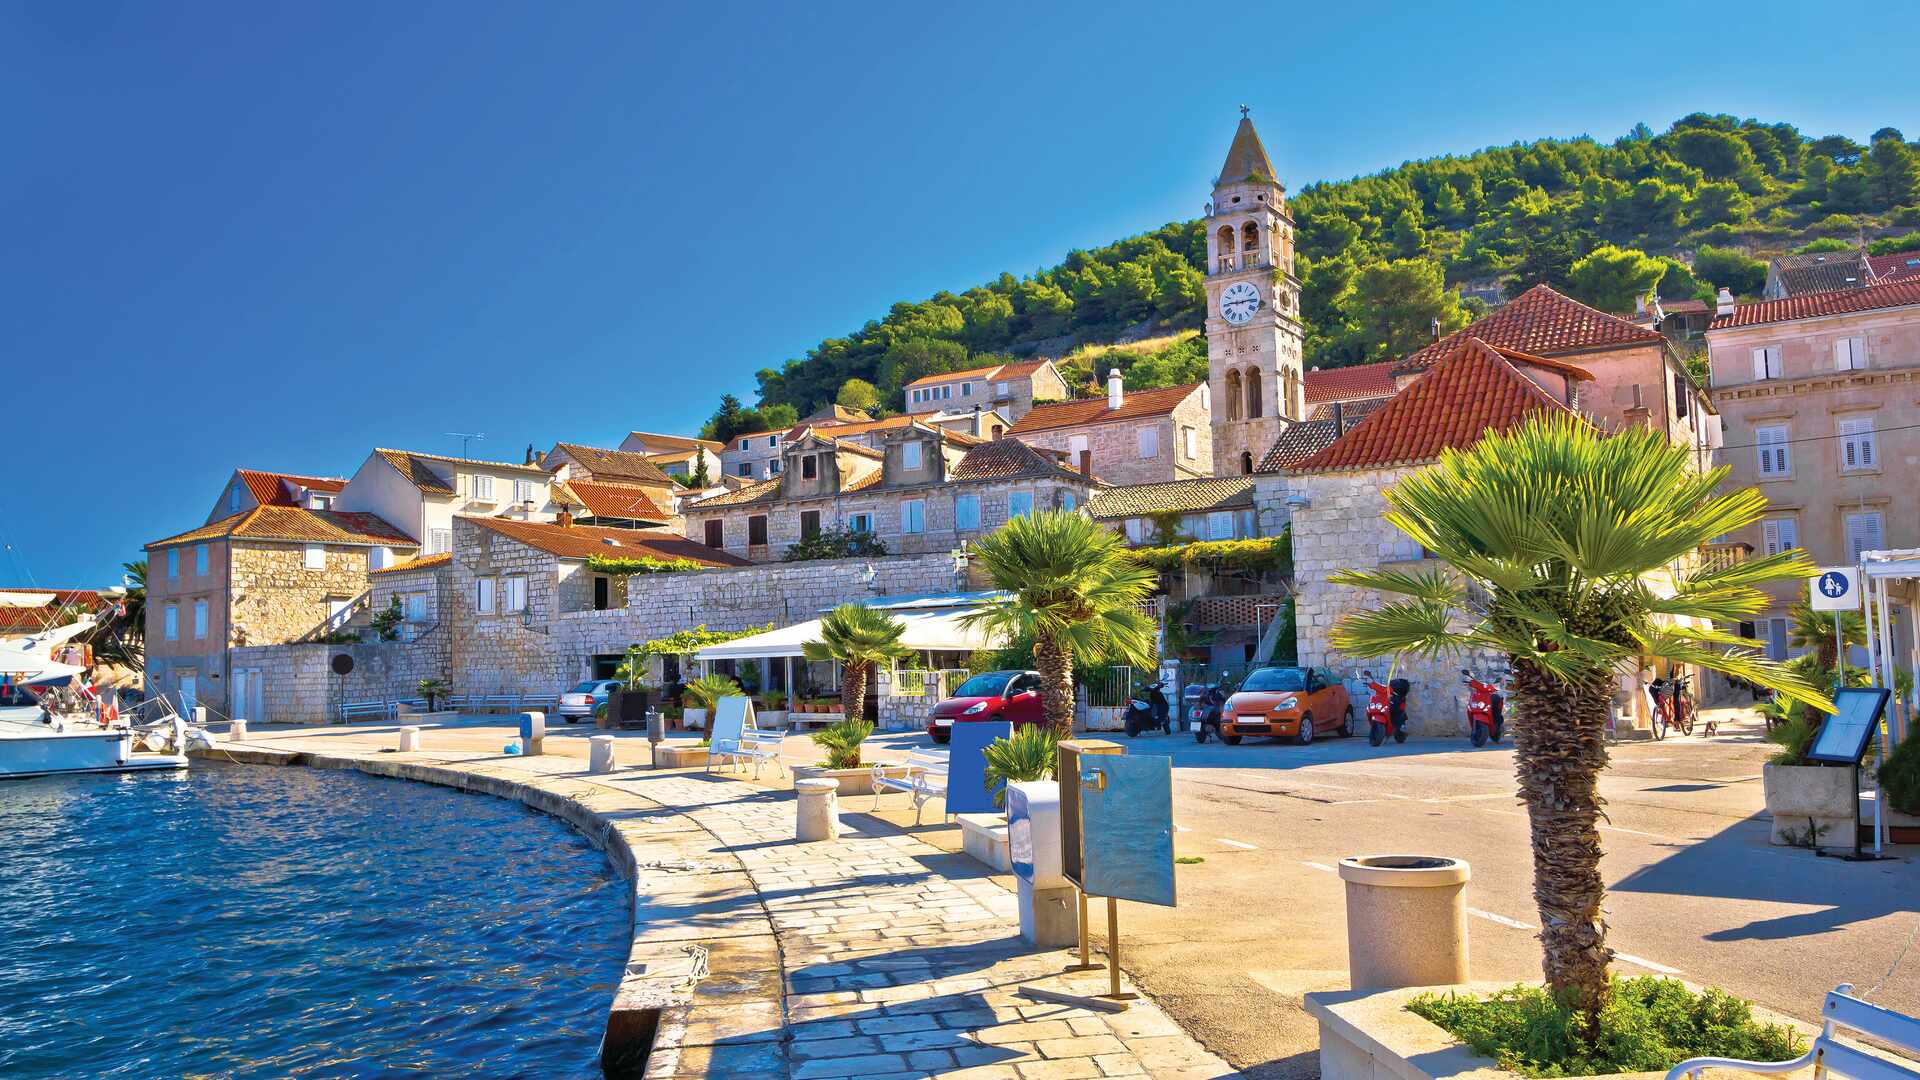 View of waterfront on Vis Island, Croatia